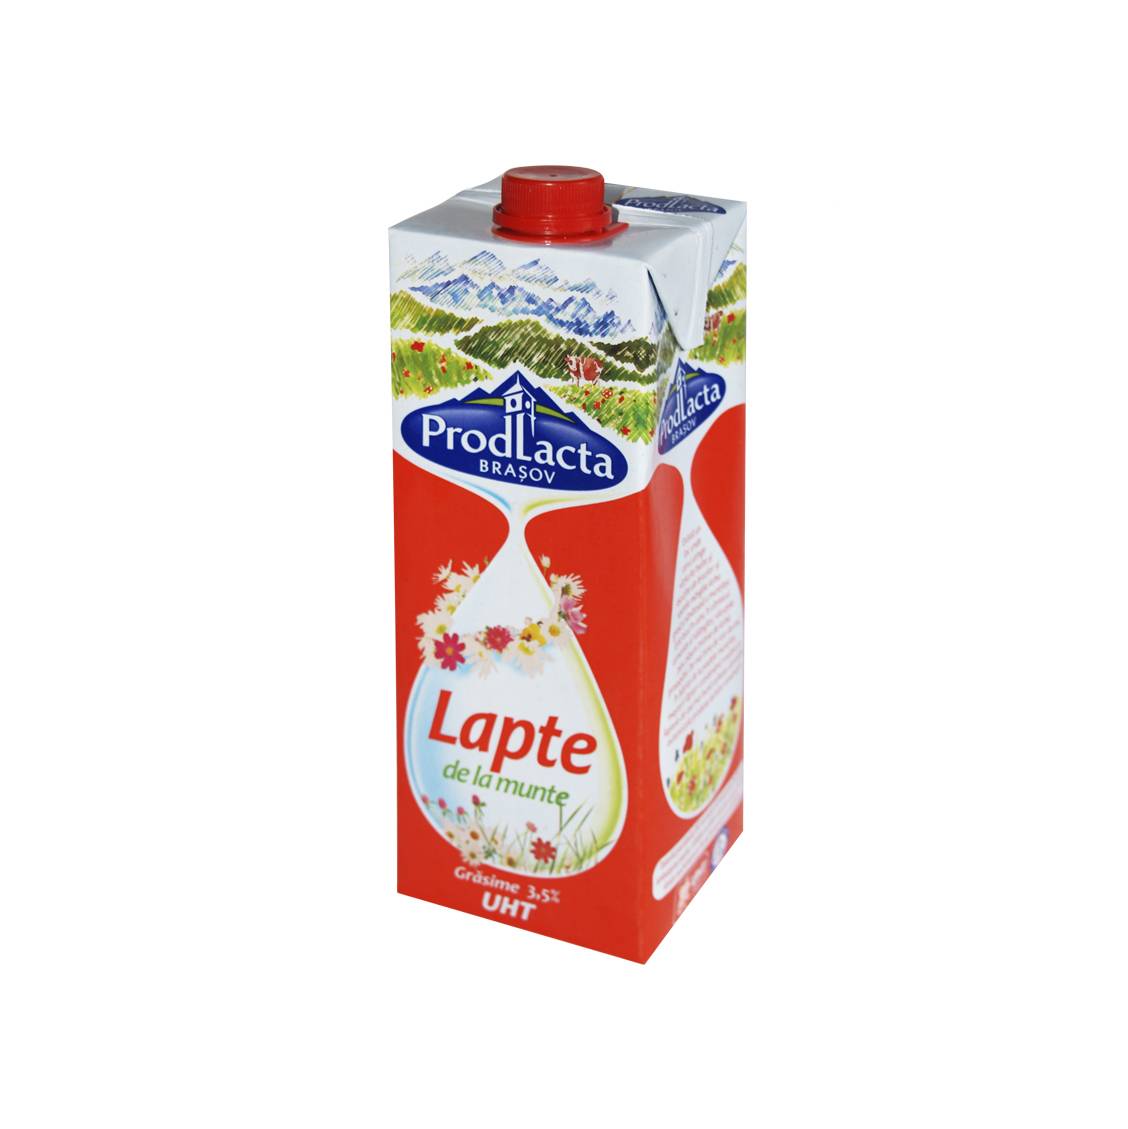 Lapte 3.5% UHT, Prodlacta